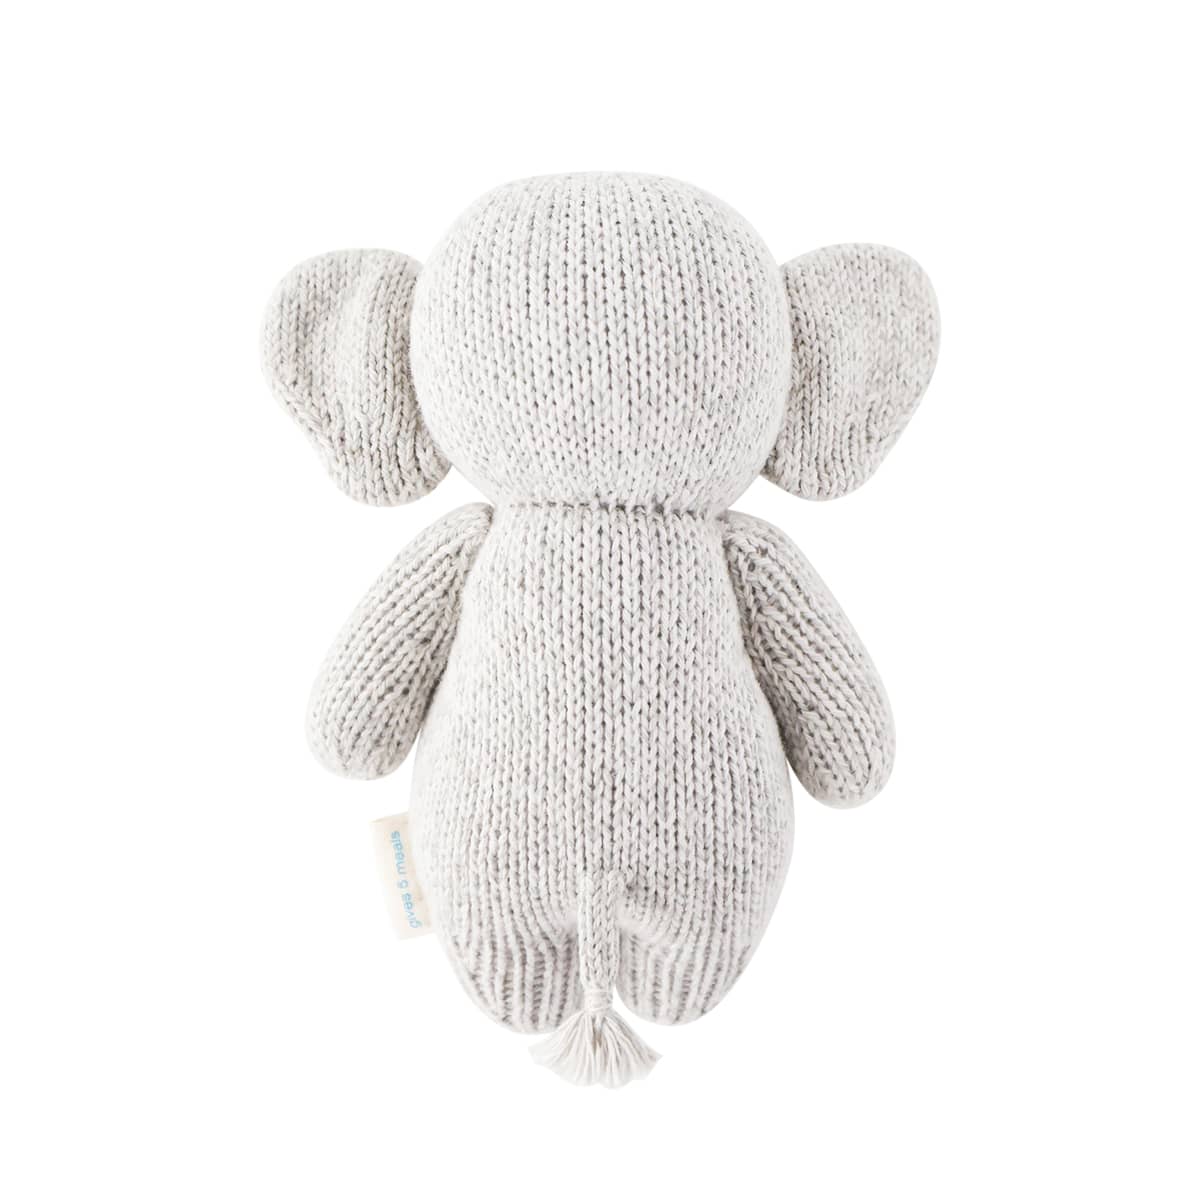 Cuddle + Kind Hand-Knit Doll - Baby Elephant